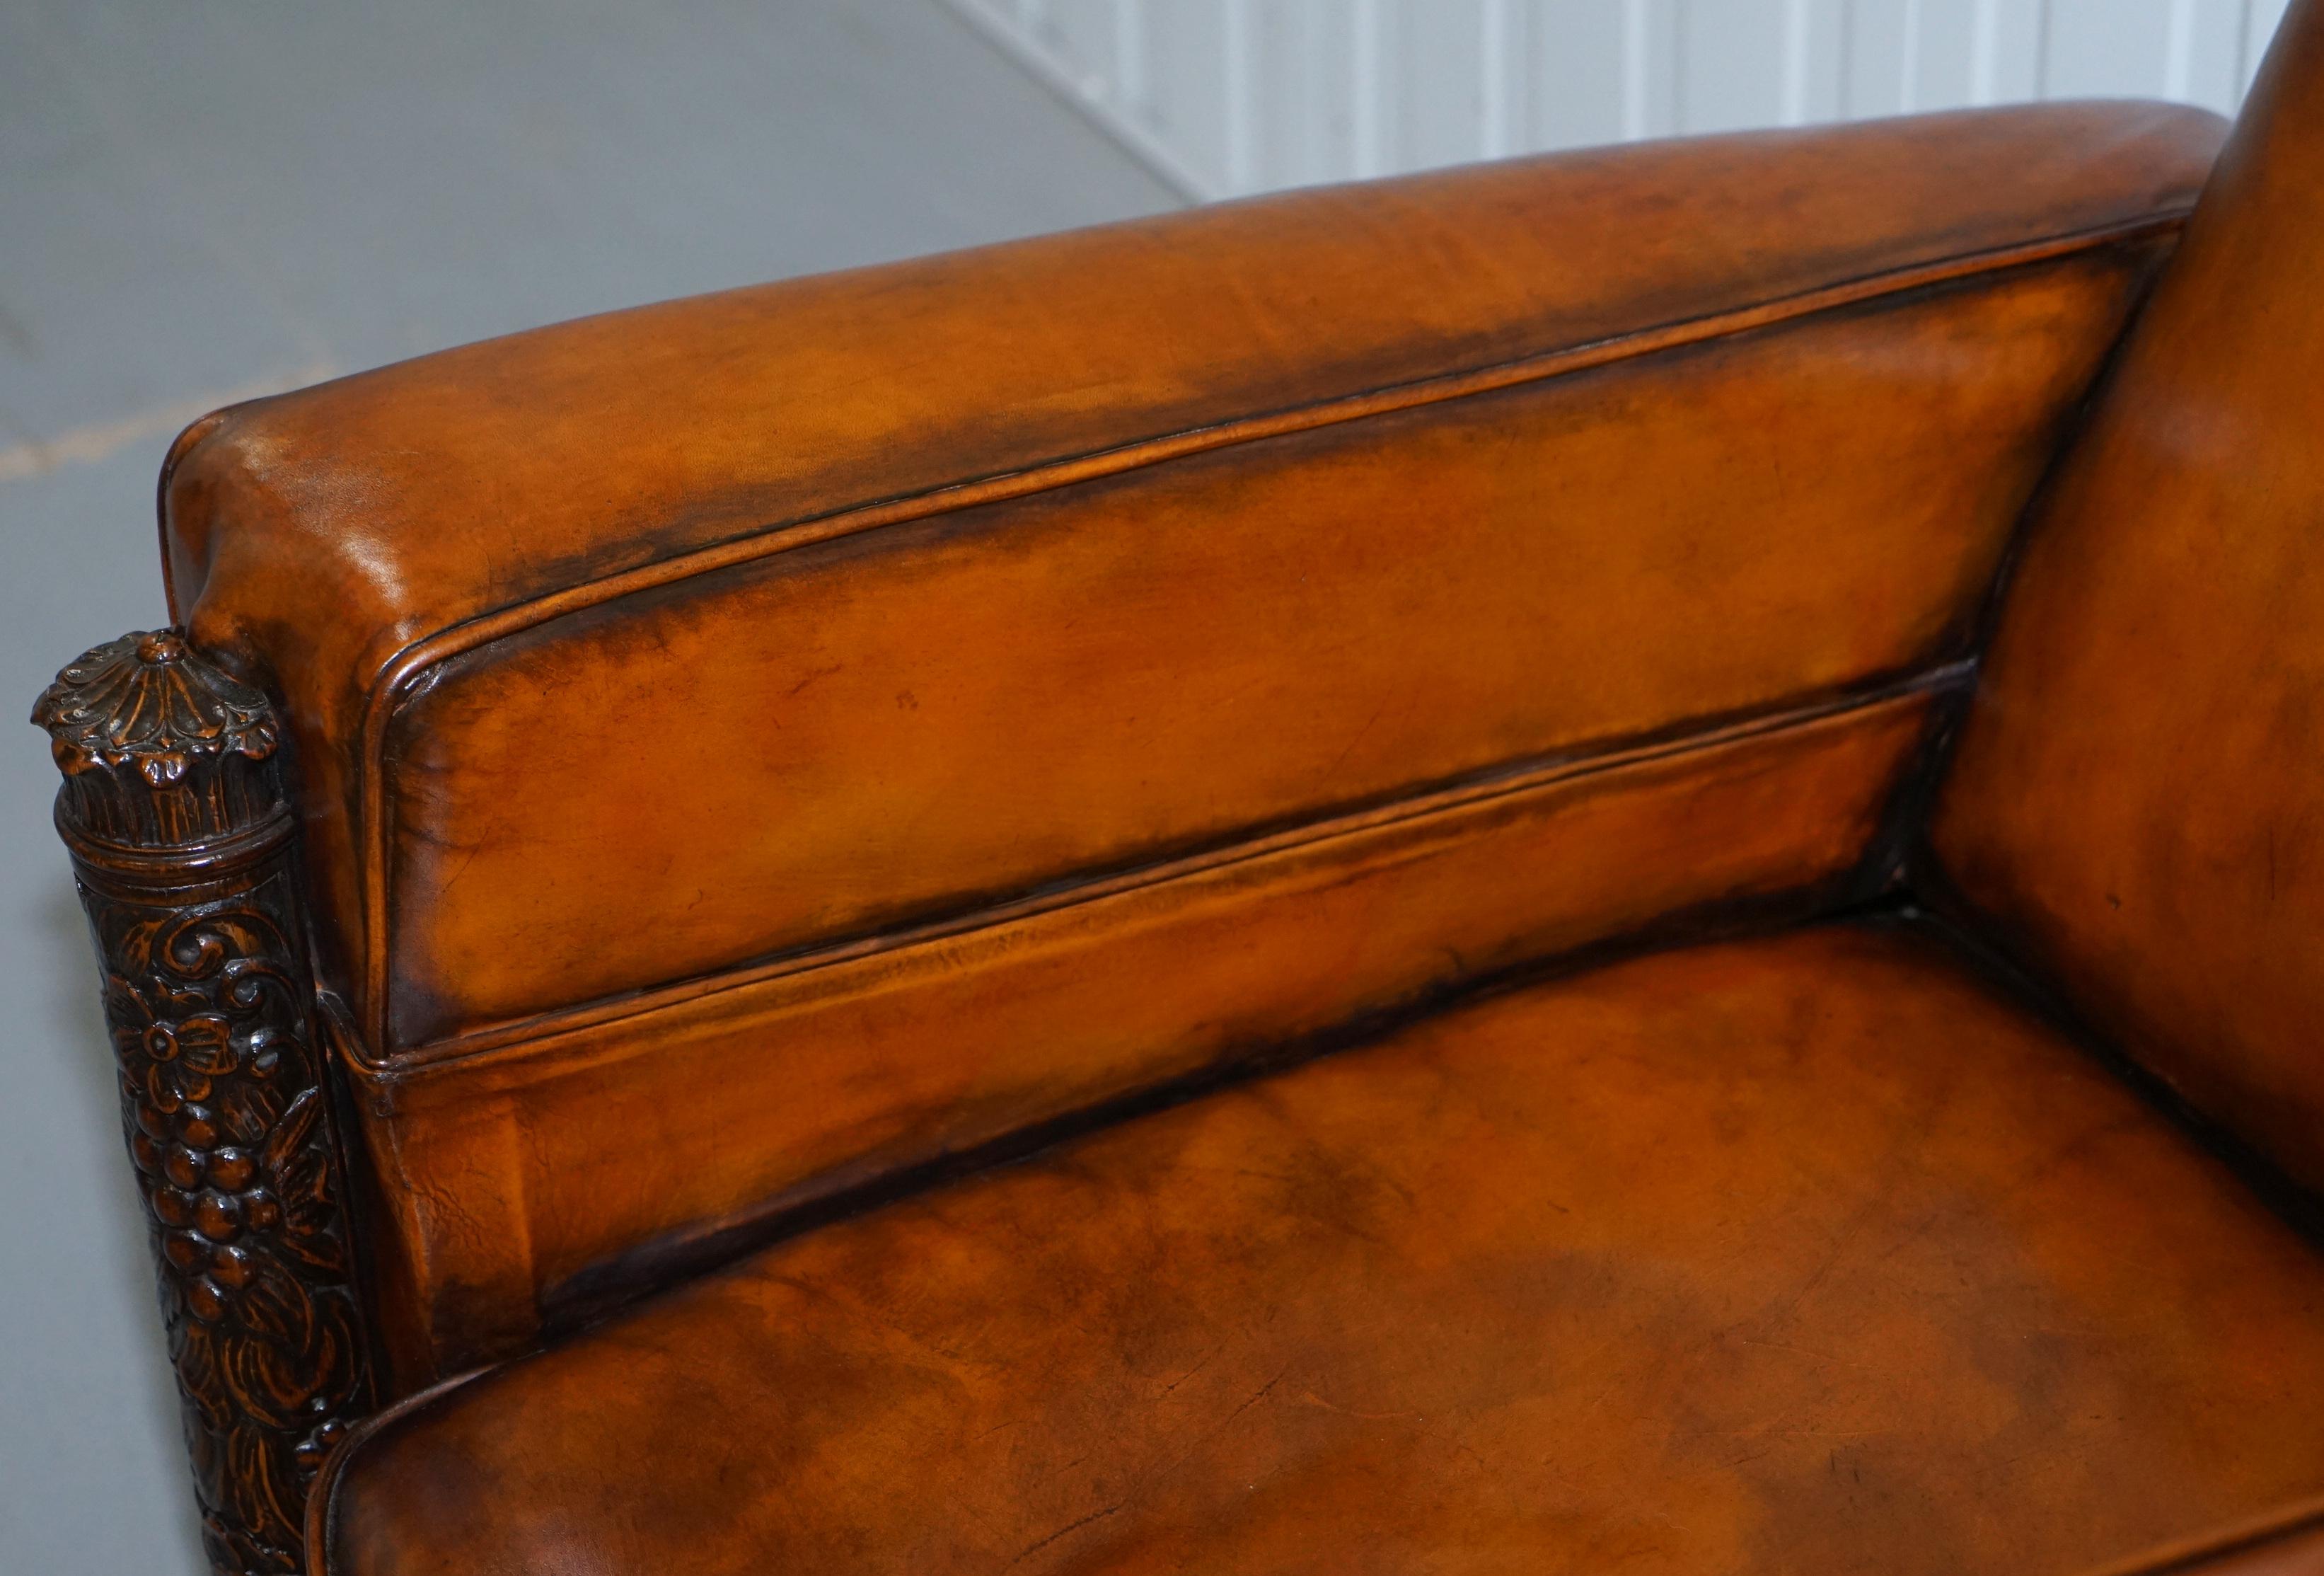 Pair of Victorian Brown Leather Club Armchairs 17th Century Cherub Putti Angels (Leder)